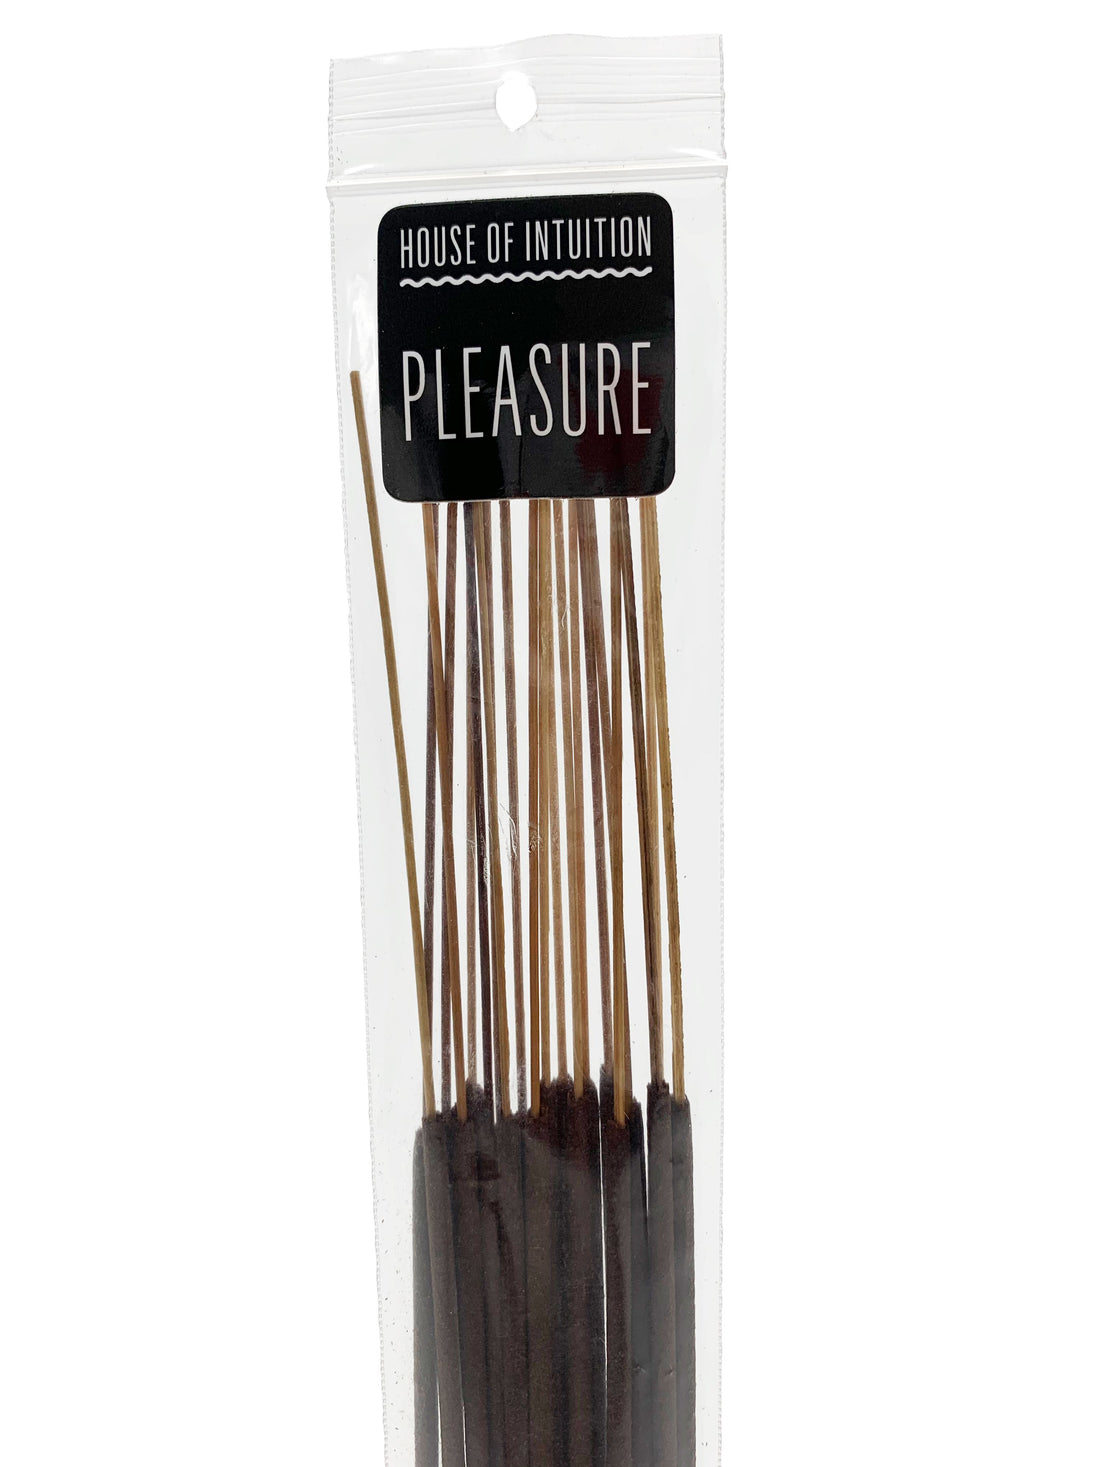 Pleasure Incense HOI Incense Sticks House of Intuition 